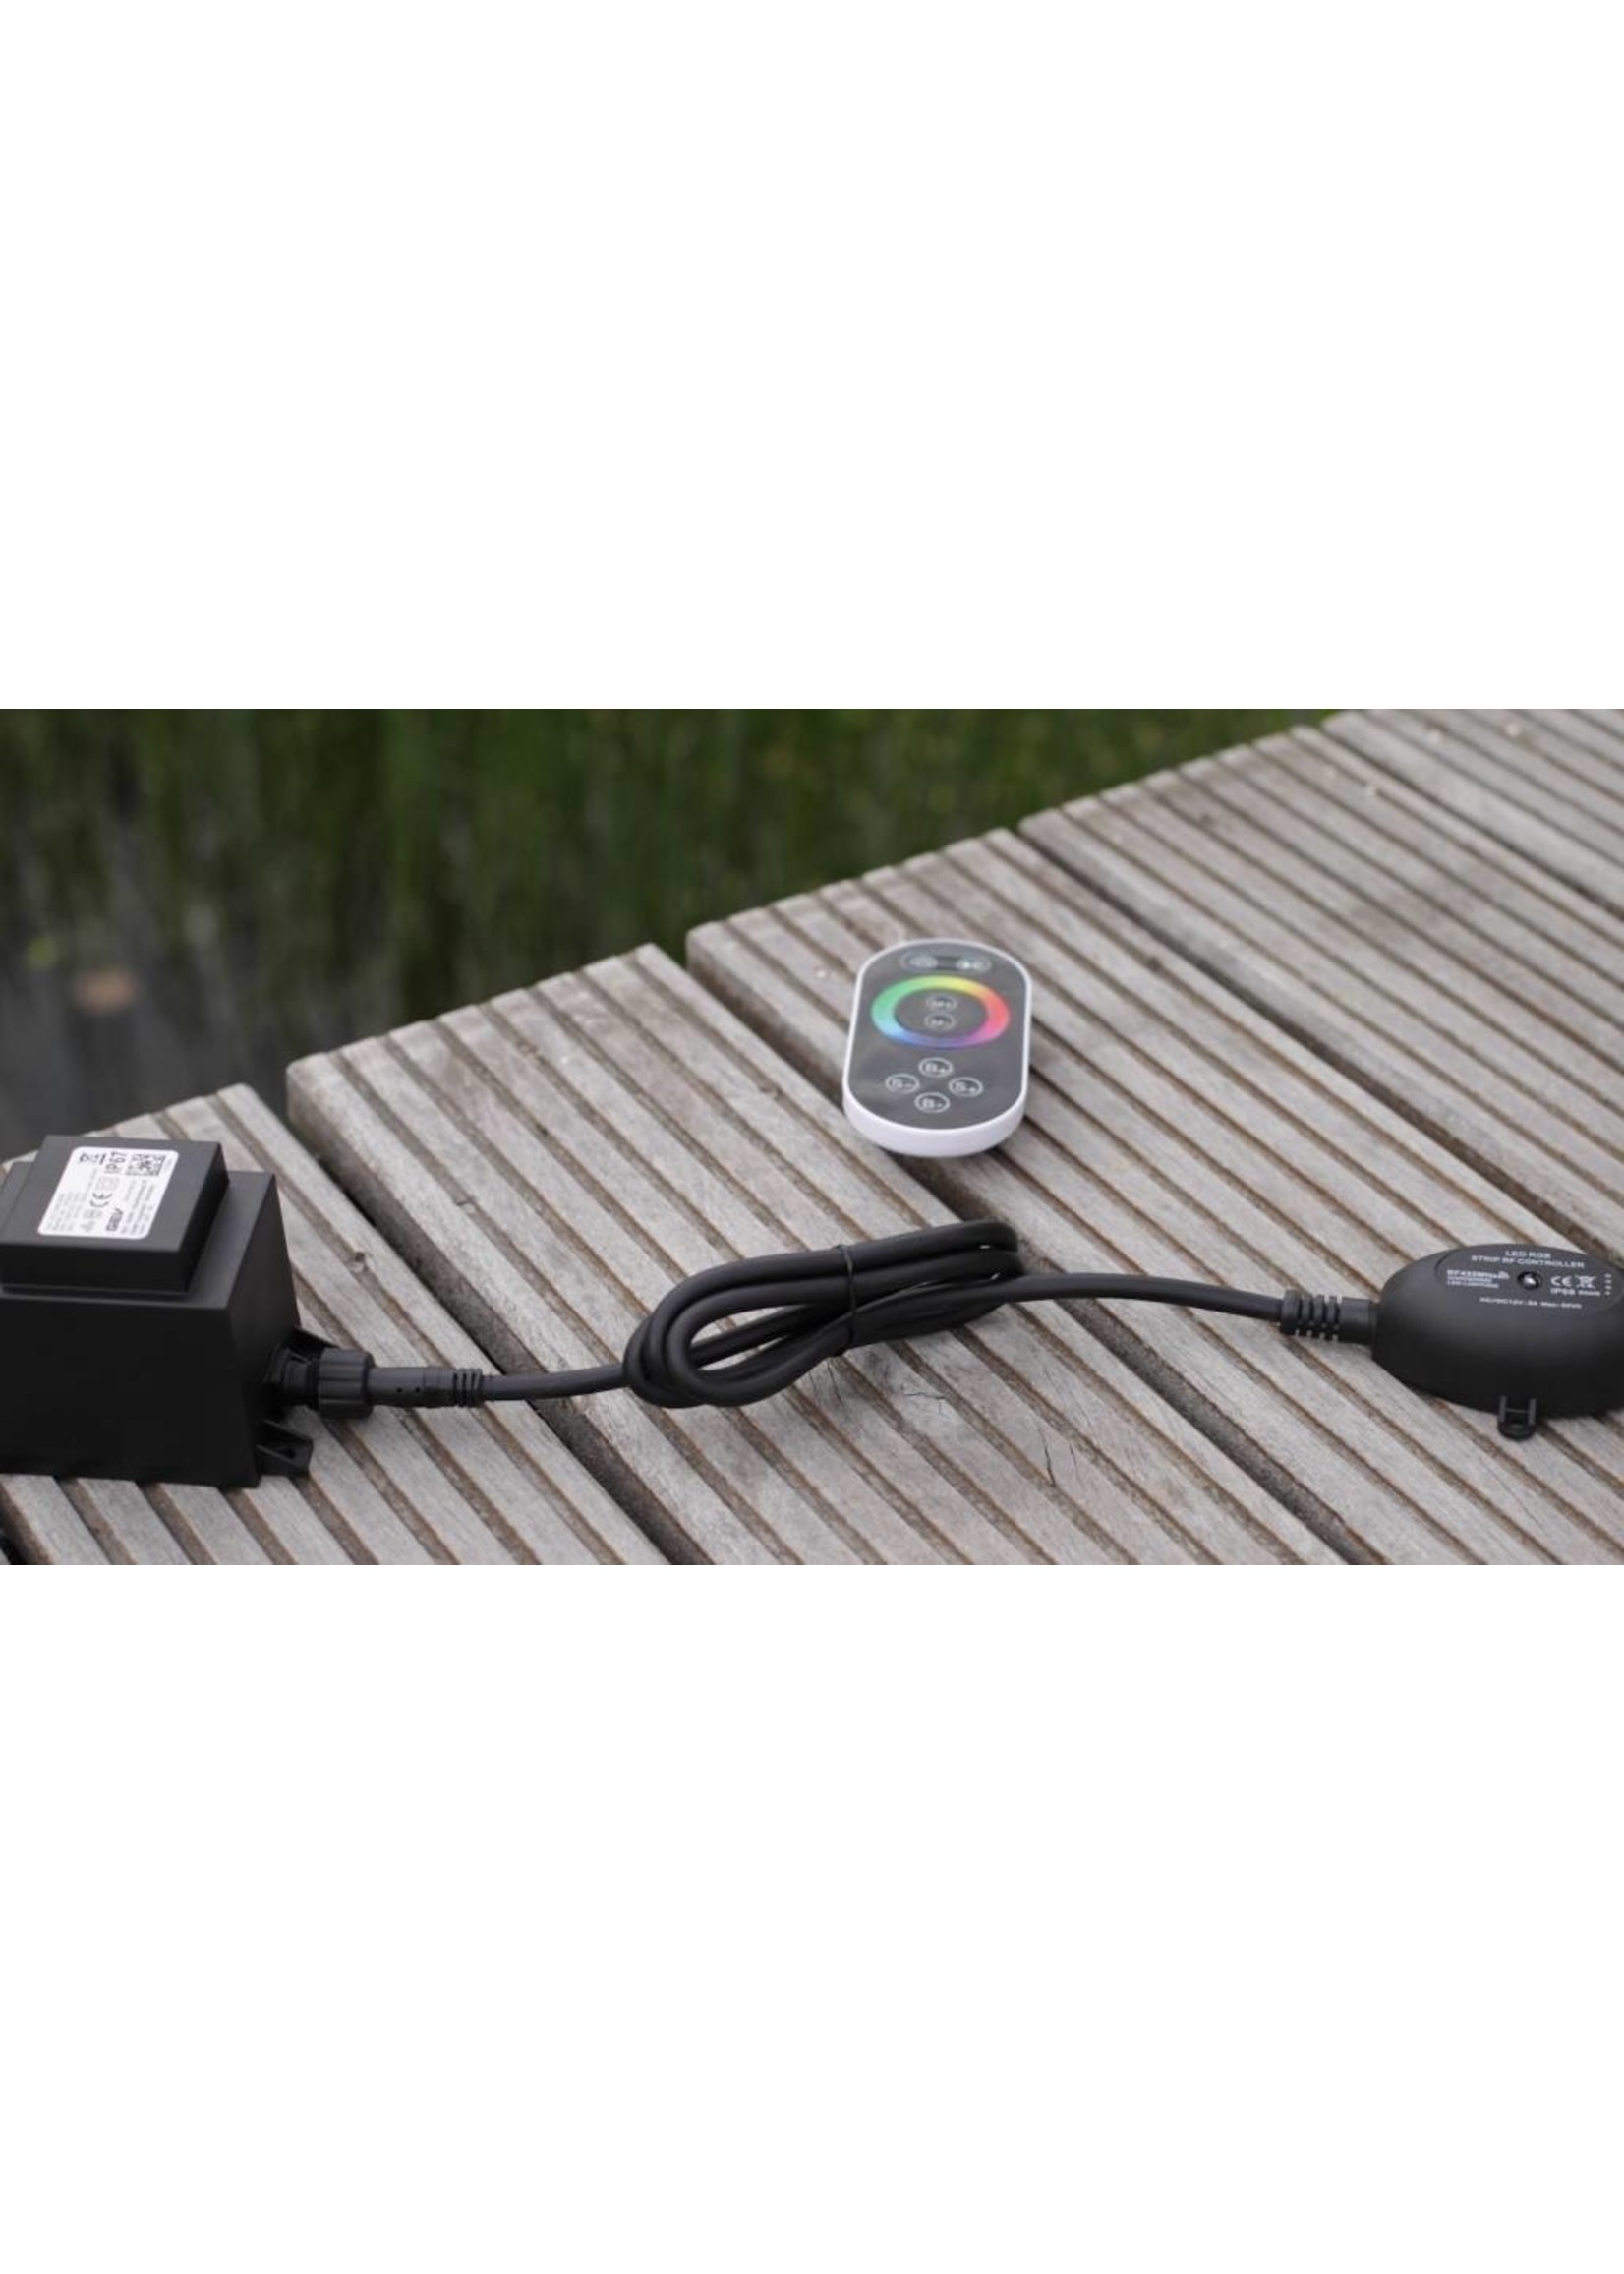 Heissner Smart Light RGB controller met afstandsbediening